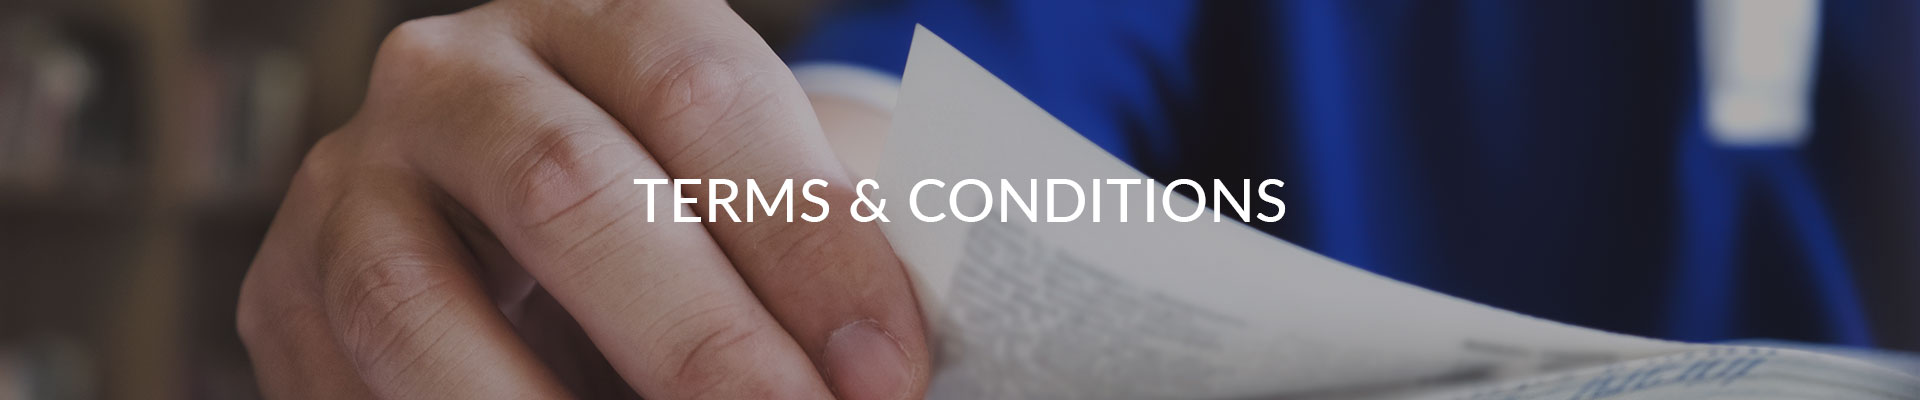 Terms & Conditions Robinson Pharma, Inc.